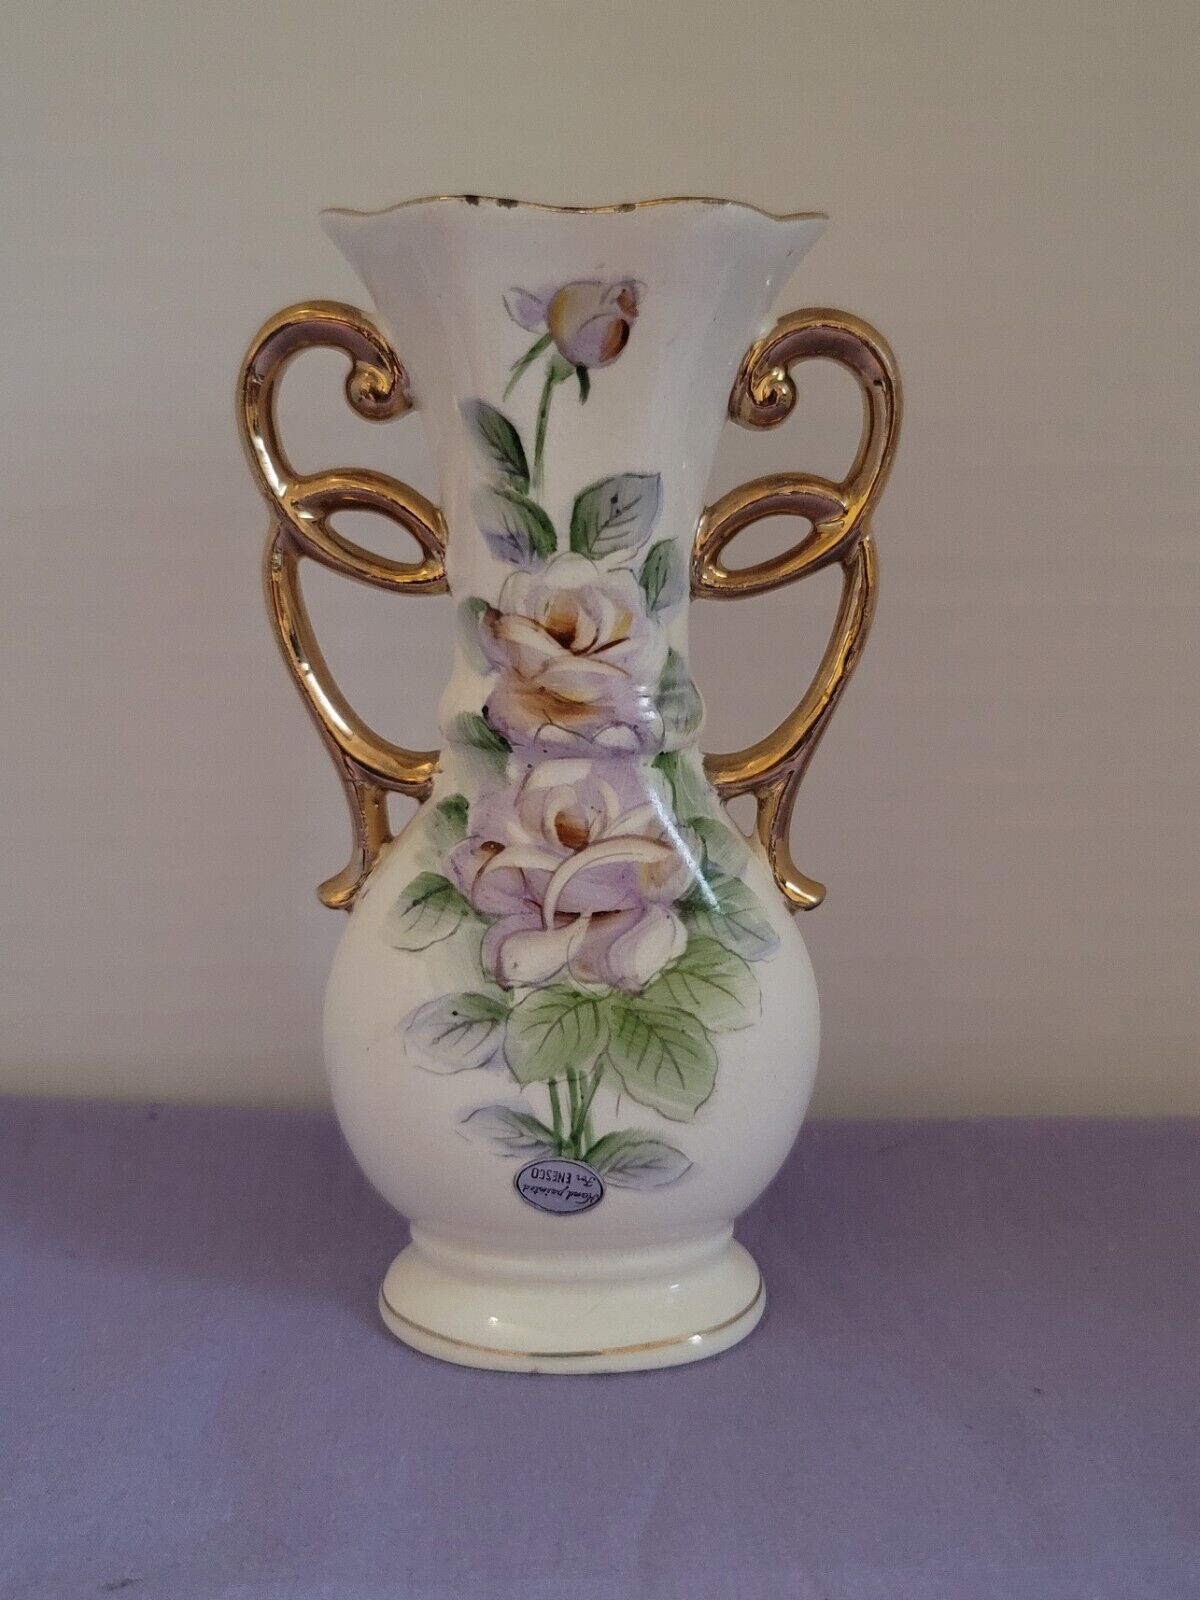 Enesco White Vase With Lavendar Roses, Handles Trimmed In Gold